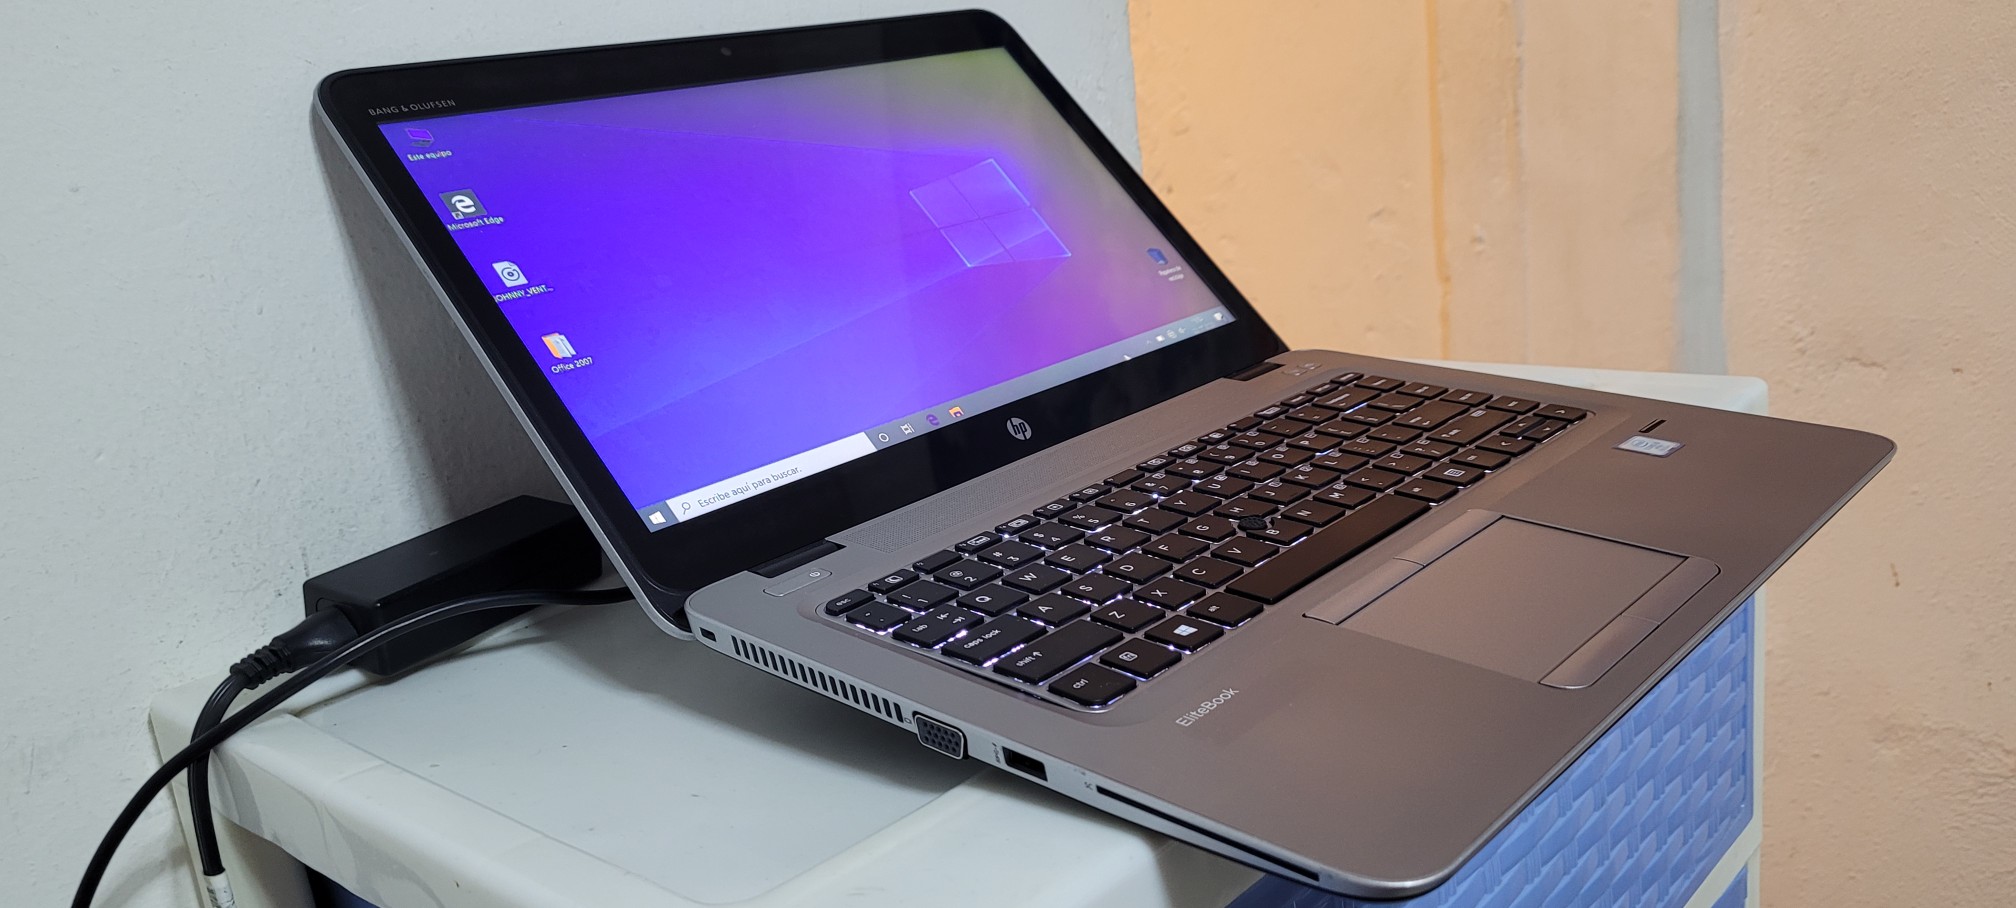 computadoras y laptops - Laptop hp Touch 14 Pulg Core i5 7ma Gen Ram 8gb ddr4 Disco 500gb 1